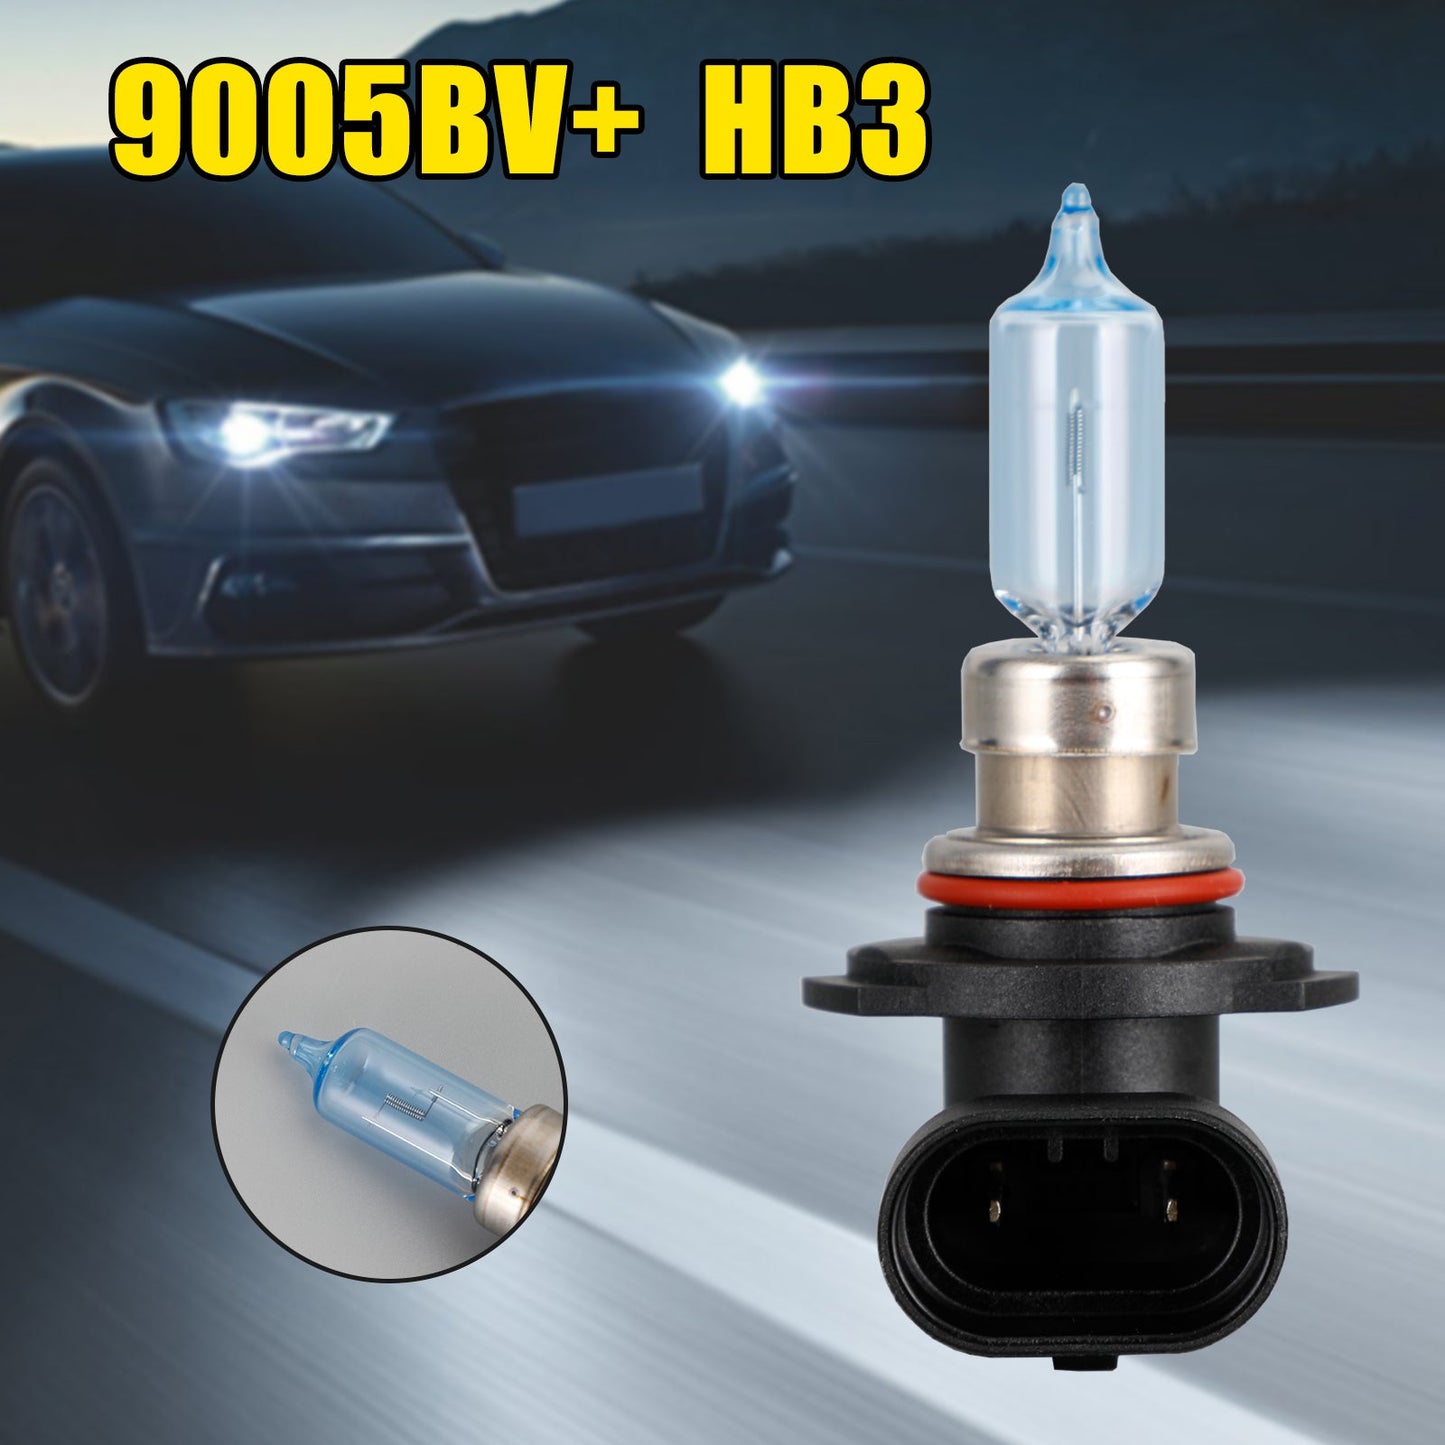 For Philips 9005BV+ BlueVision 4000K Car Headlight Bulbs HB3 12V60W P20D